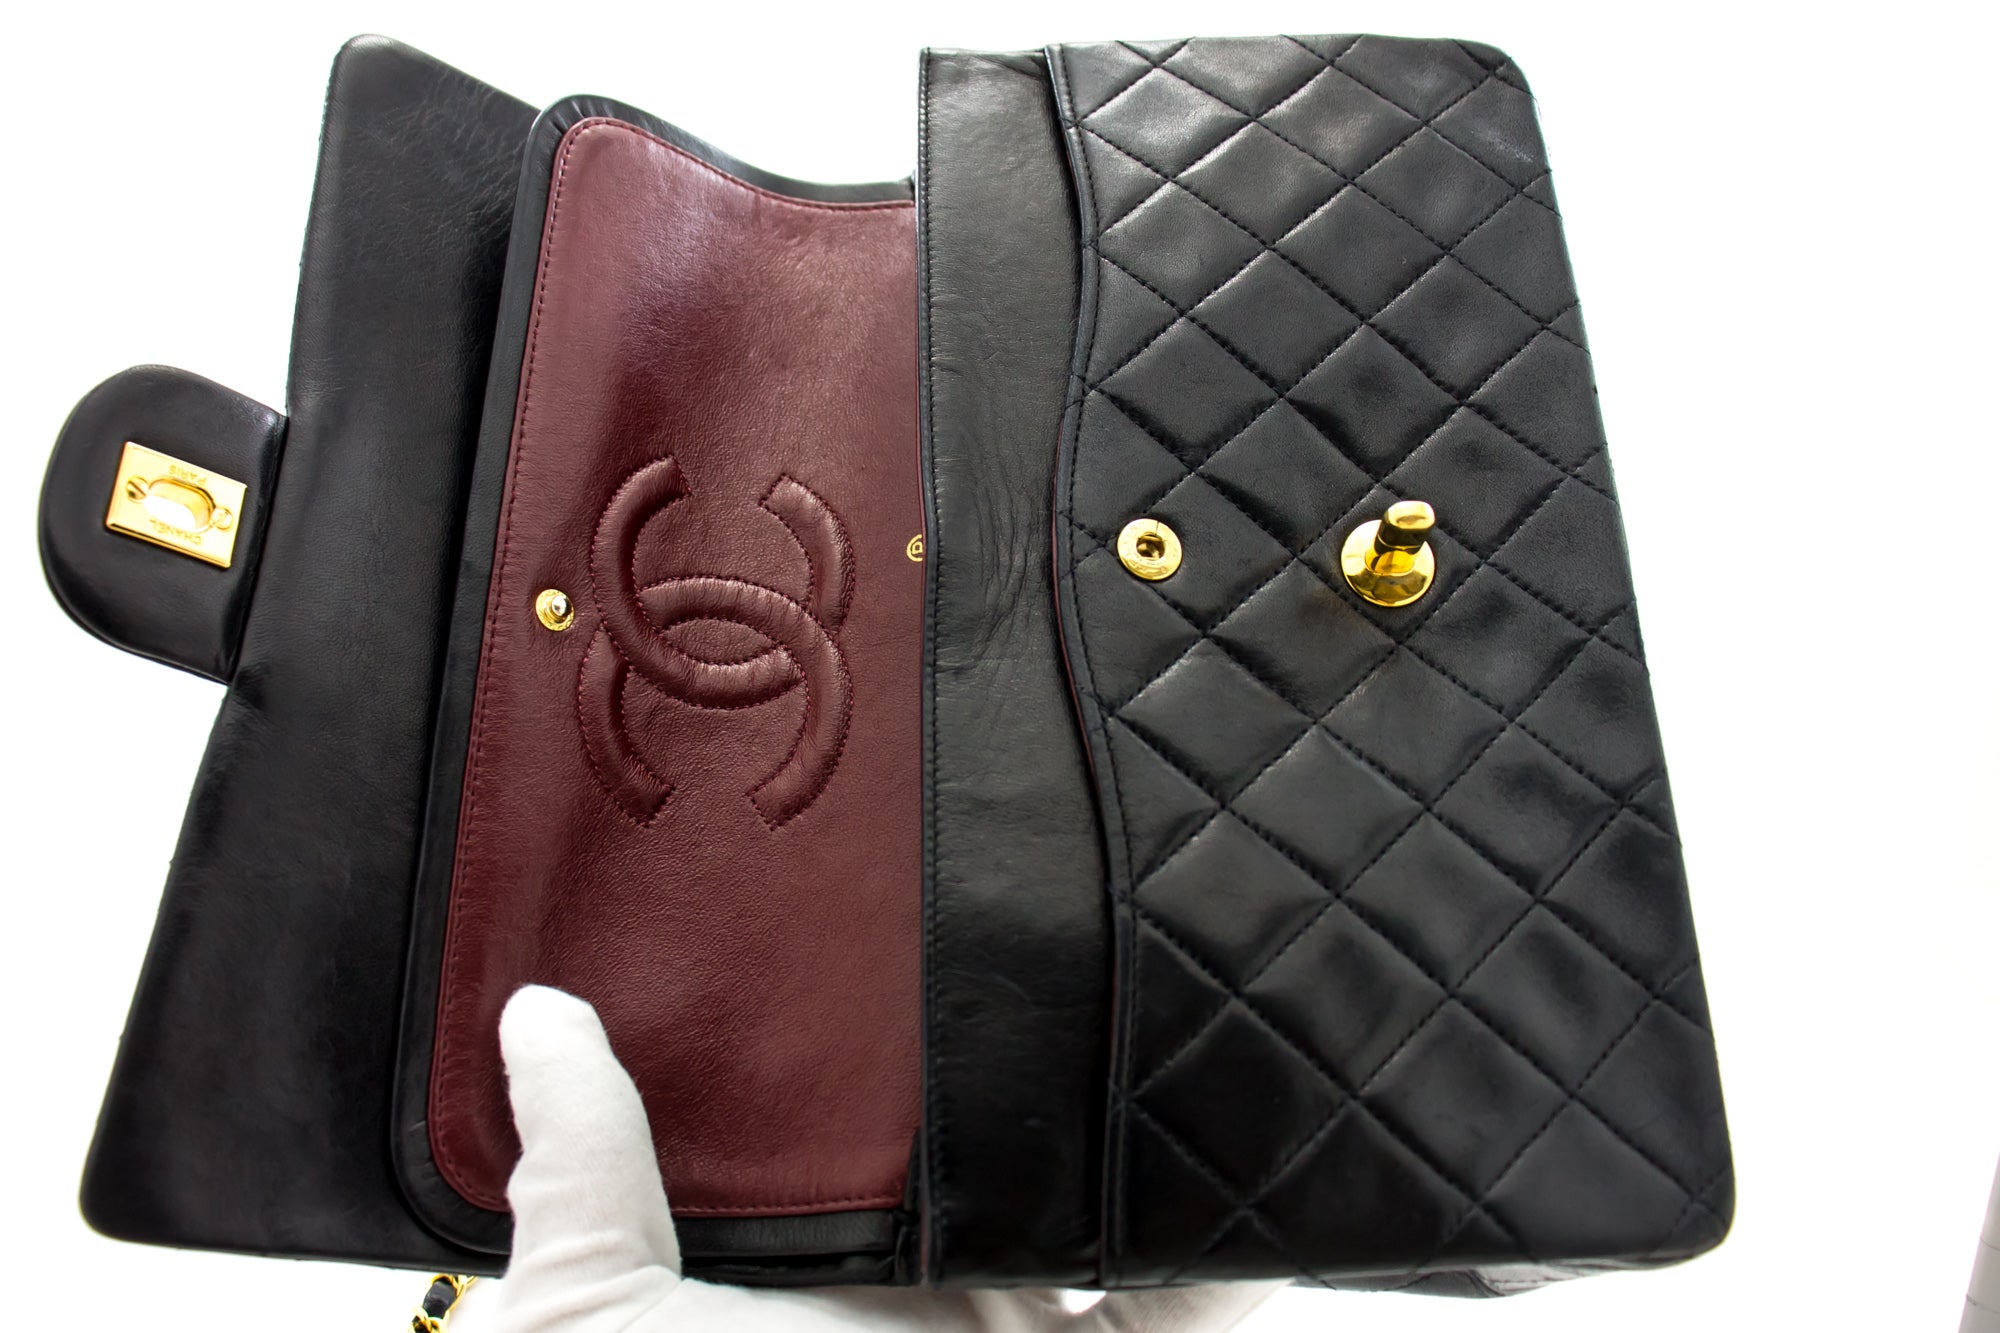 CHANEL 2.55 Double Flap Medium Chain Shoulder Bag Black Lambskin i51 –  hannari-shop